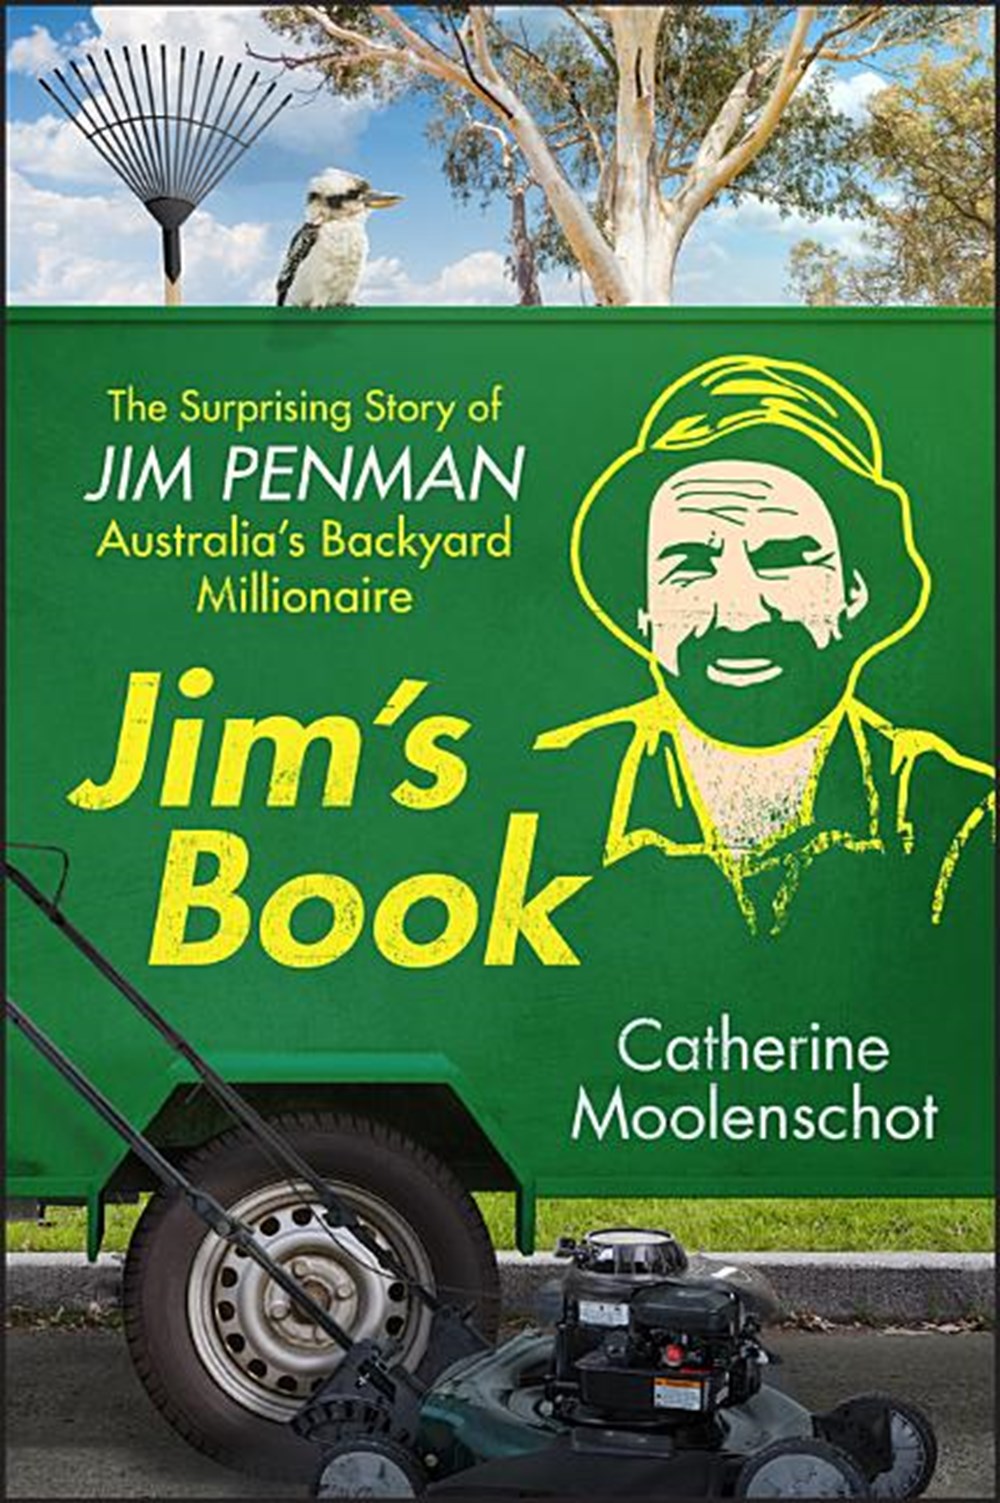 Jim's Book: The Surprising Story of Jim Penman - Australia's Backyard Millionaire